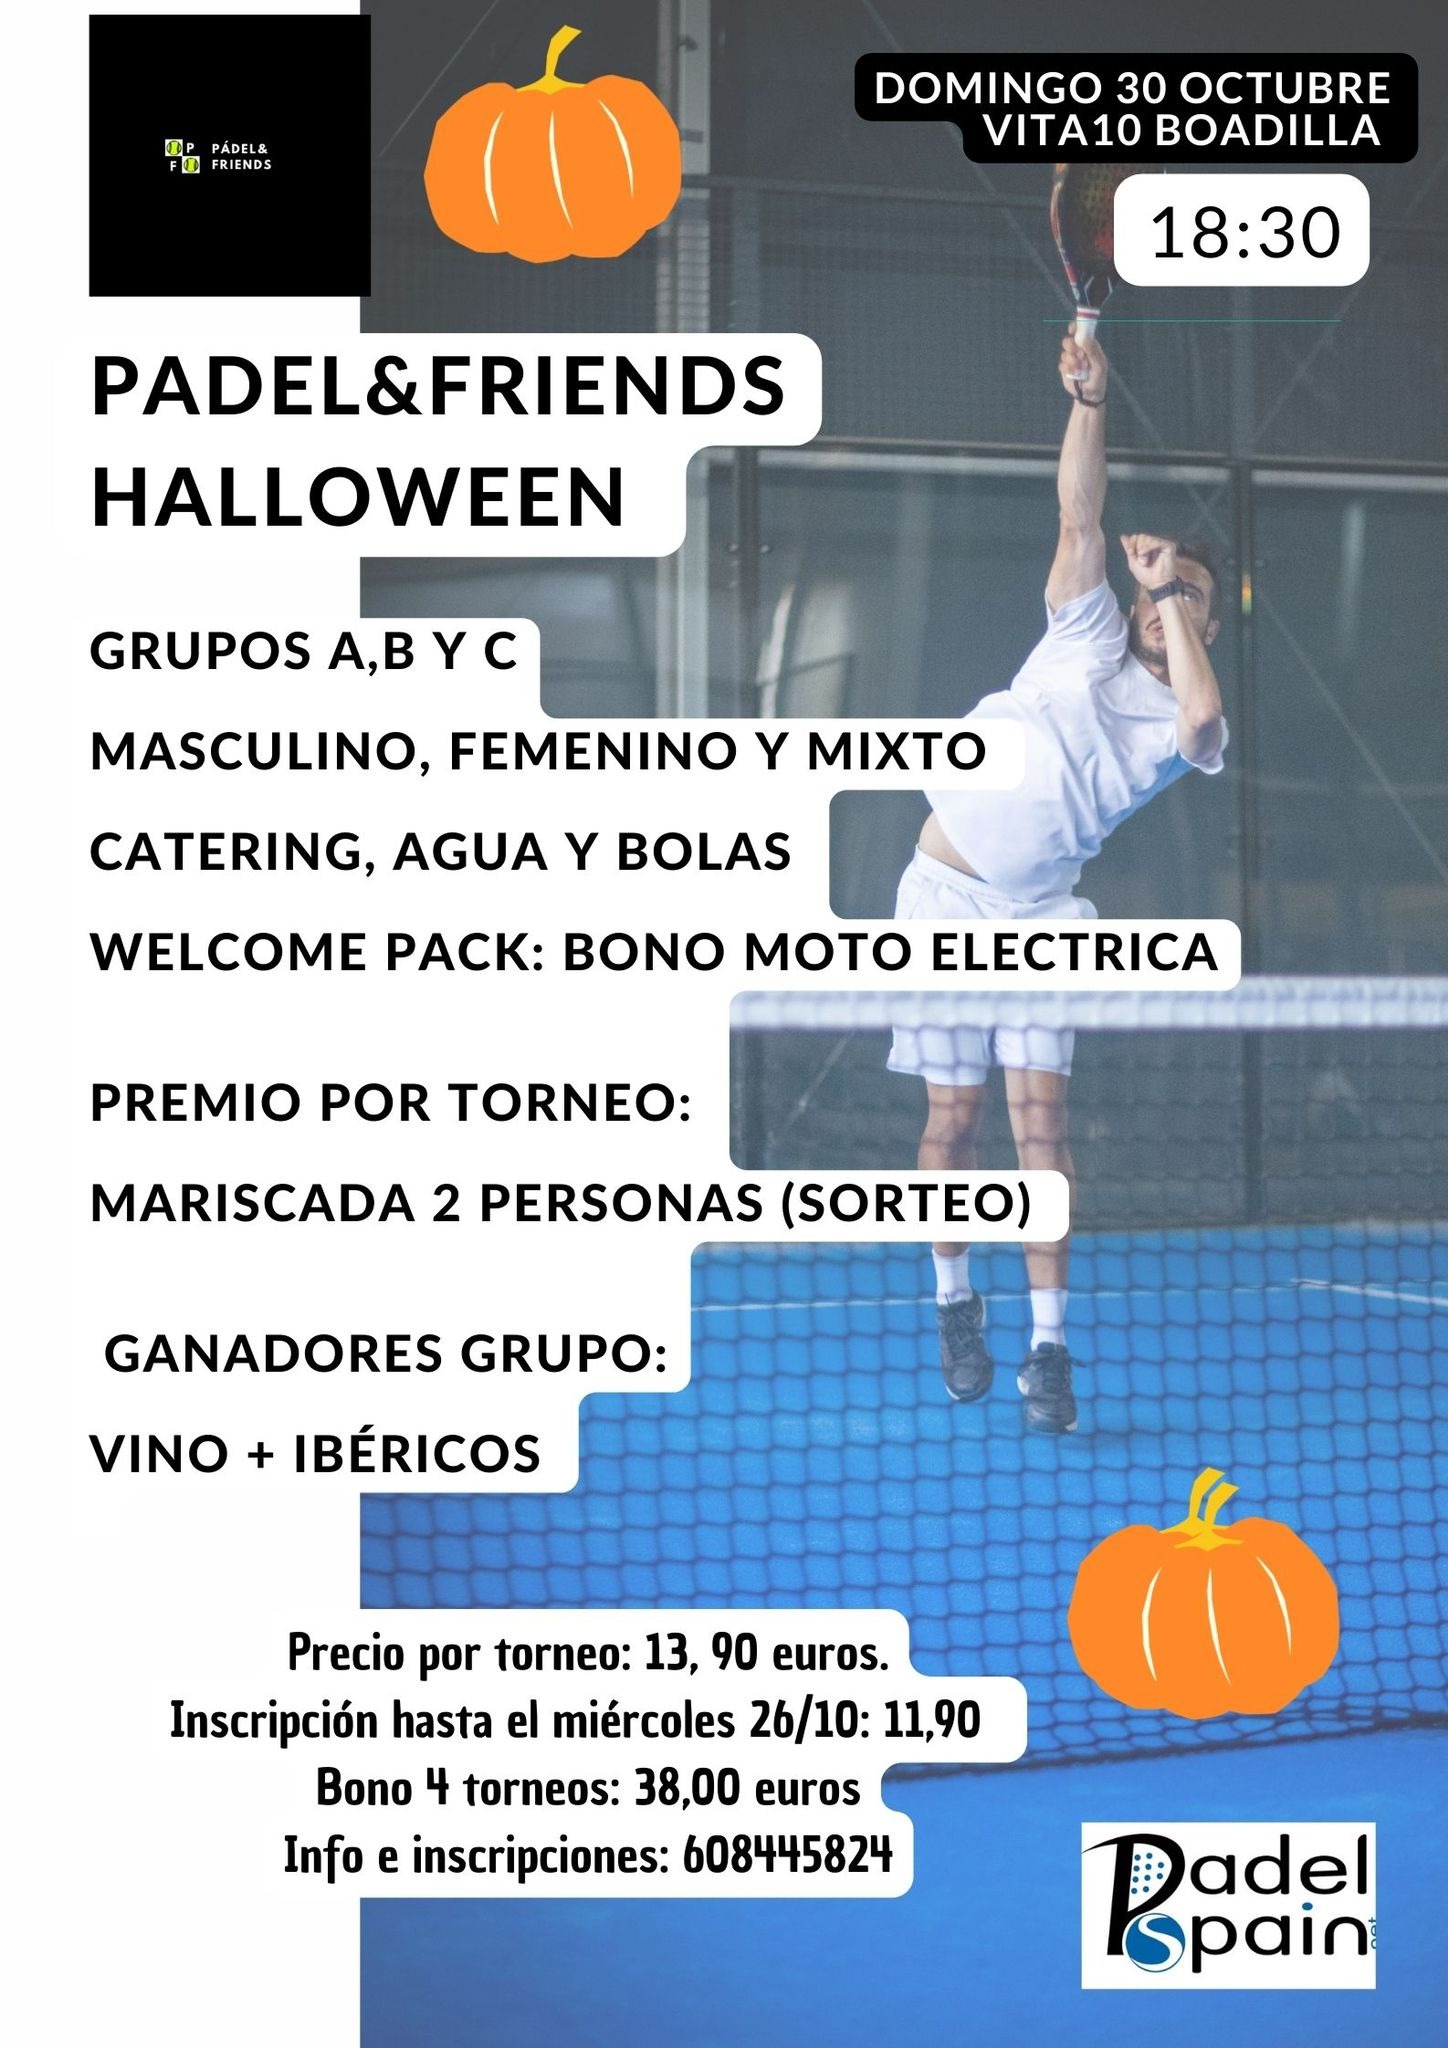 Torneo padel and friends halloween vita 10 2022